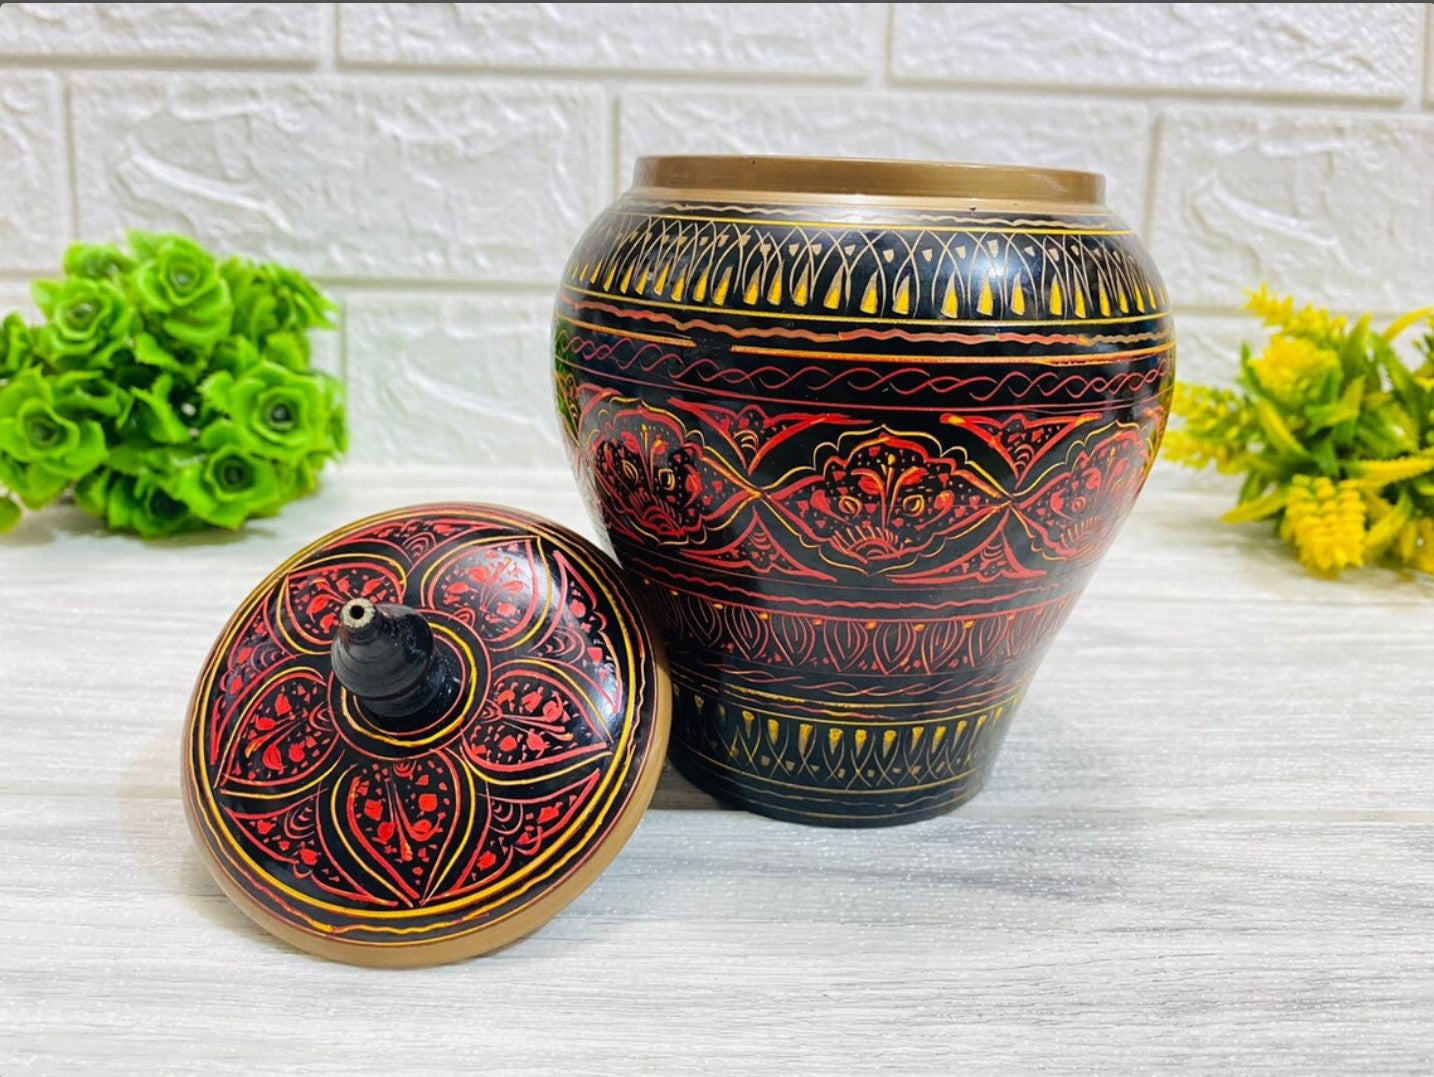 Small Laquer Art Vase with Lid - Black I lauqer art Craft Decorative Accent I handpainted handcrafted I Sheesham Wood ( RoseWood) I Pakistani Artisan Design